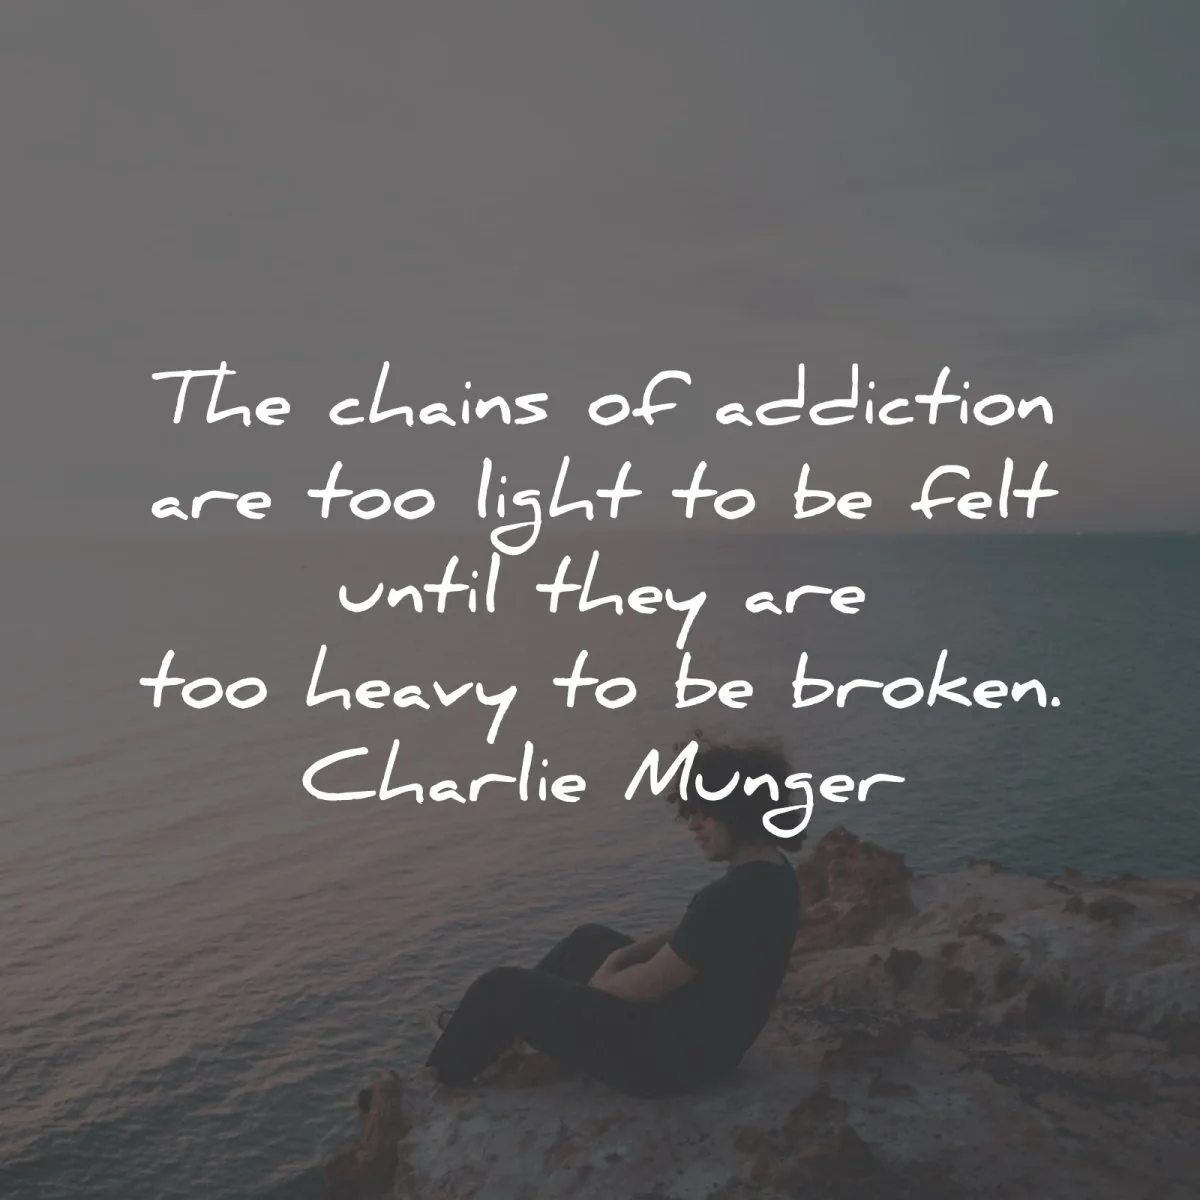 addiction social media quotes chains too light felt broken charlie munger wisdom